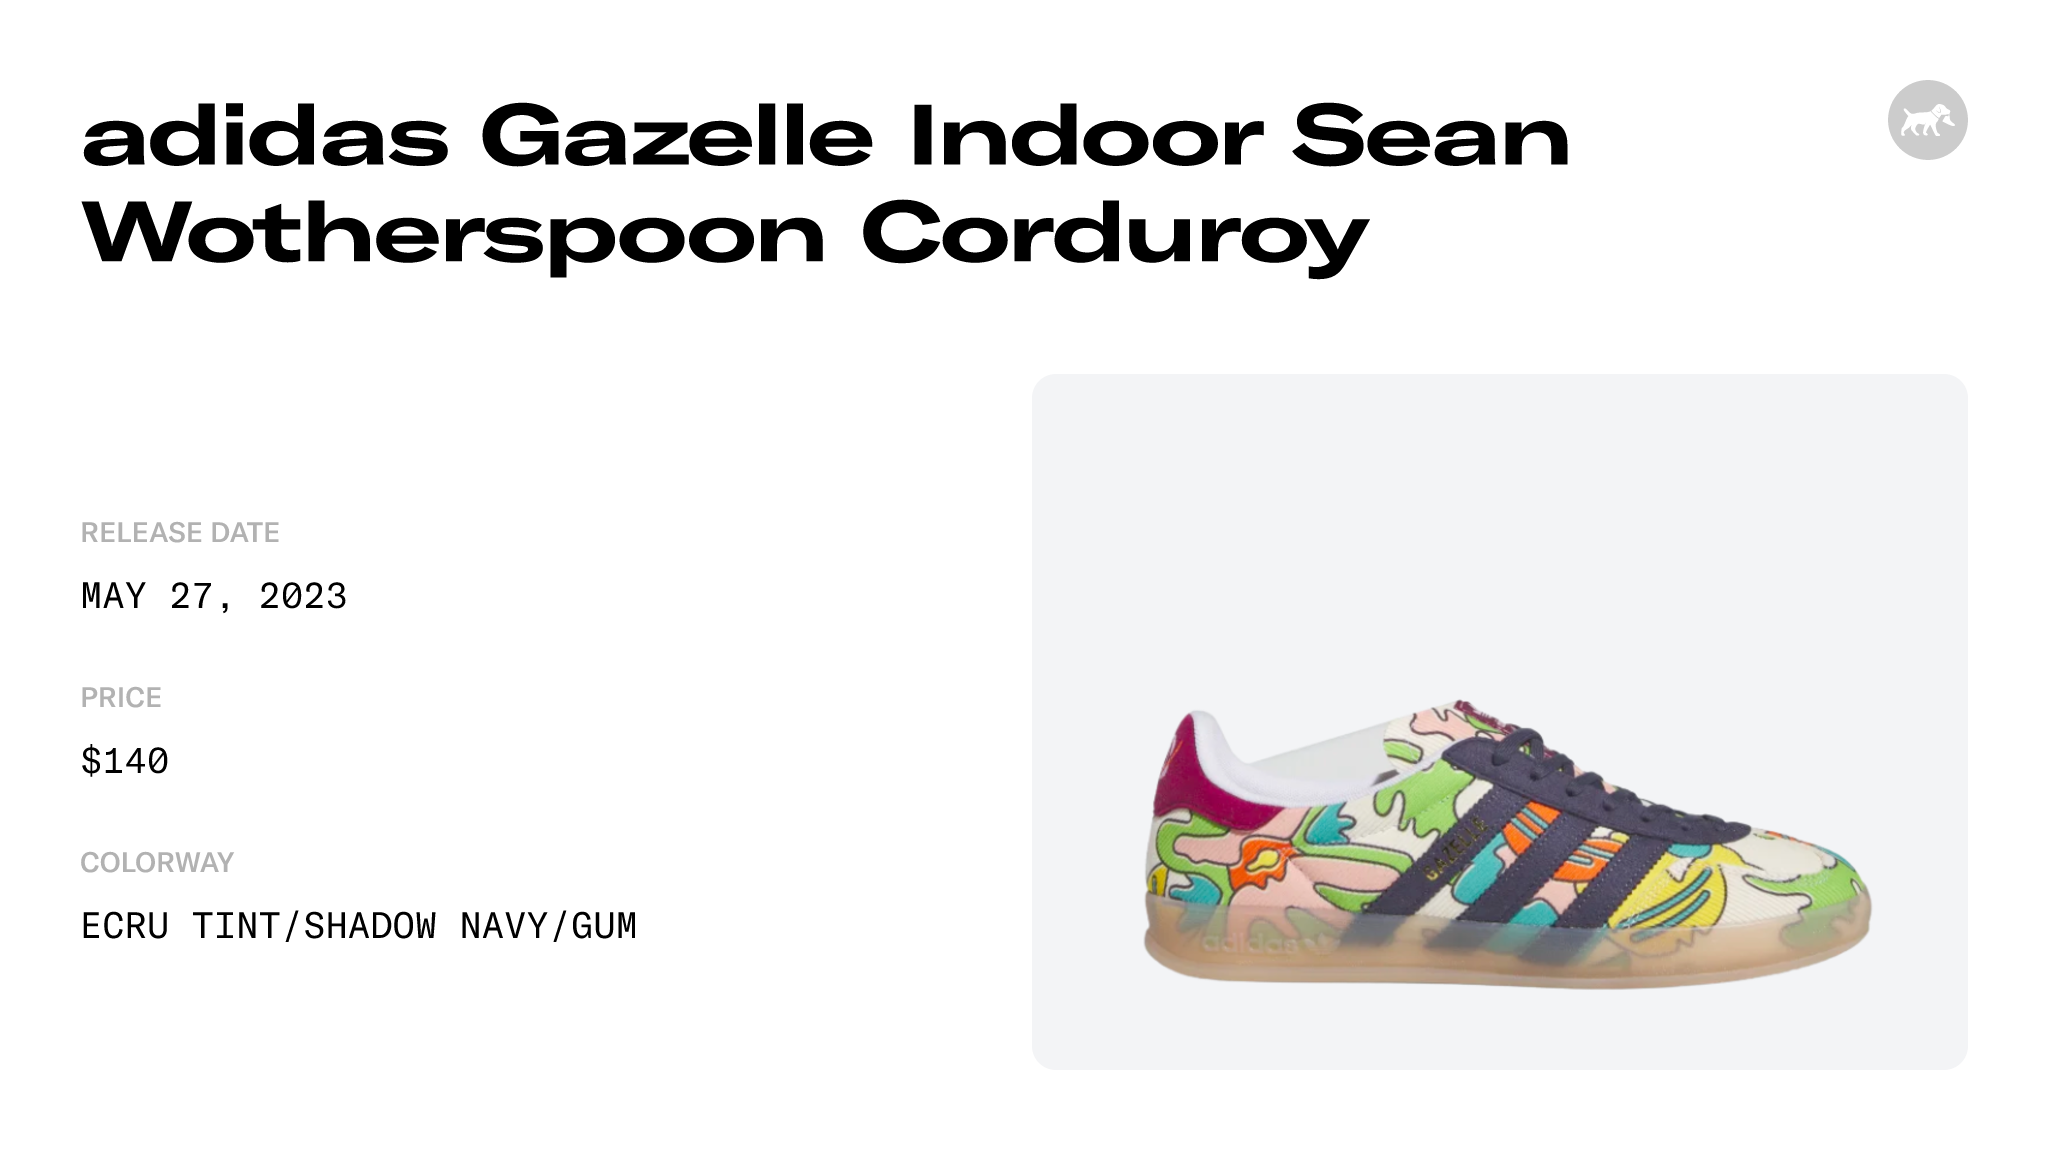 Sean Wotherspoon x adidas Gazelle Indoor Corduroy IG2849